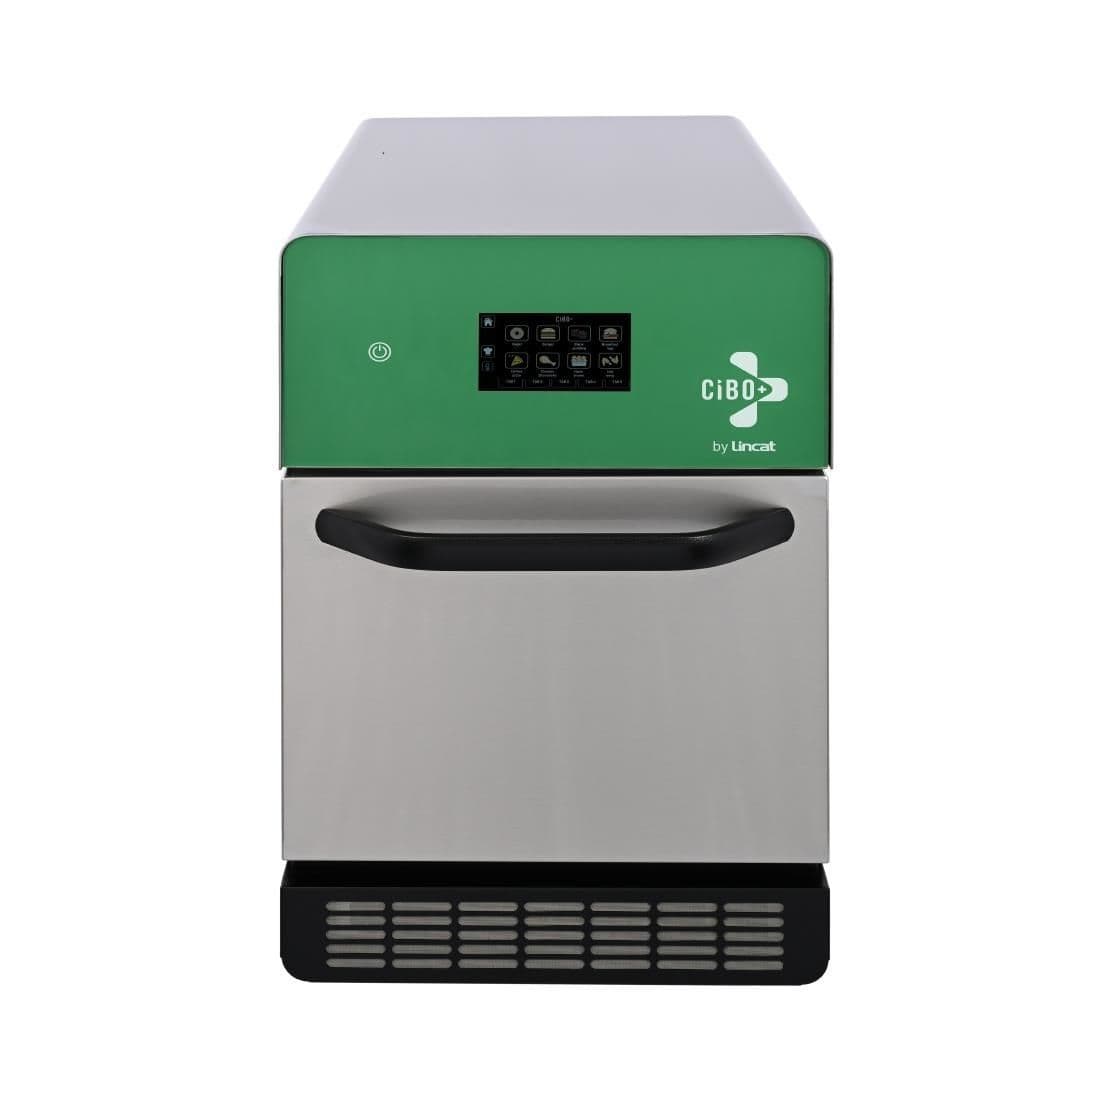 CIBOPLUS/G - Lincat CiBO+ High Speed Oven - Green JD Catering Equipment Solutions Ltd